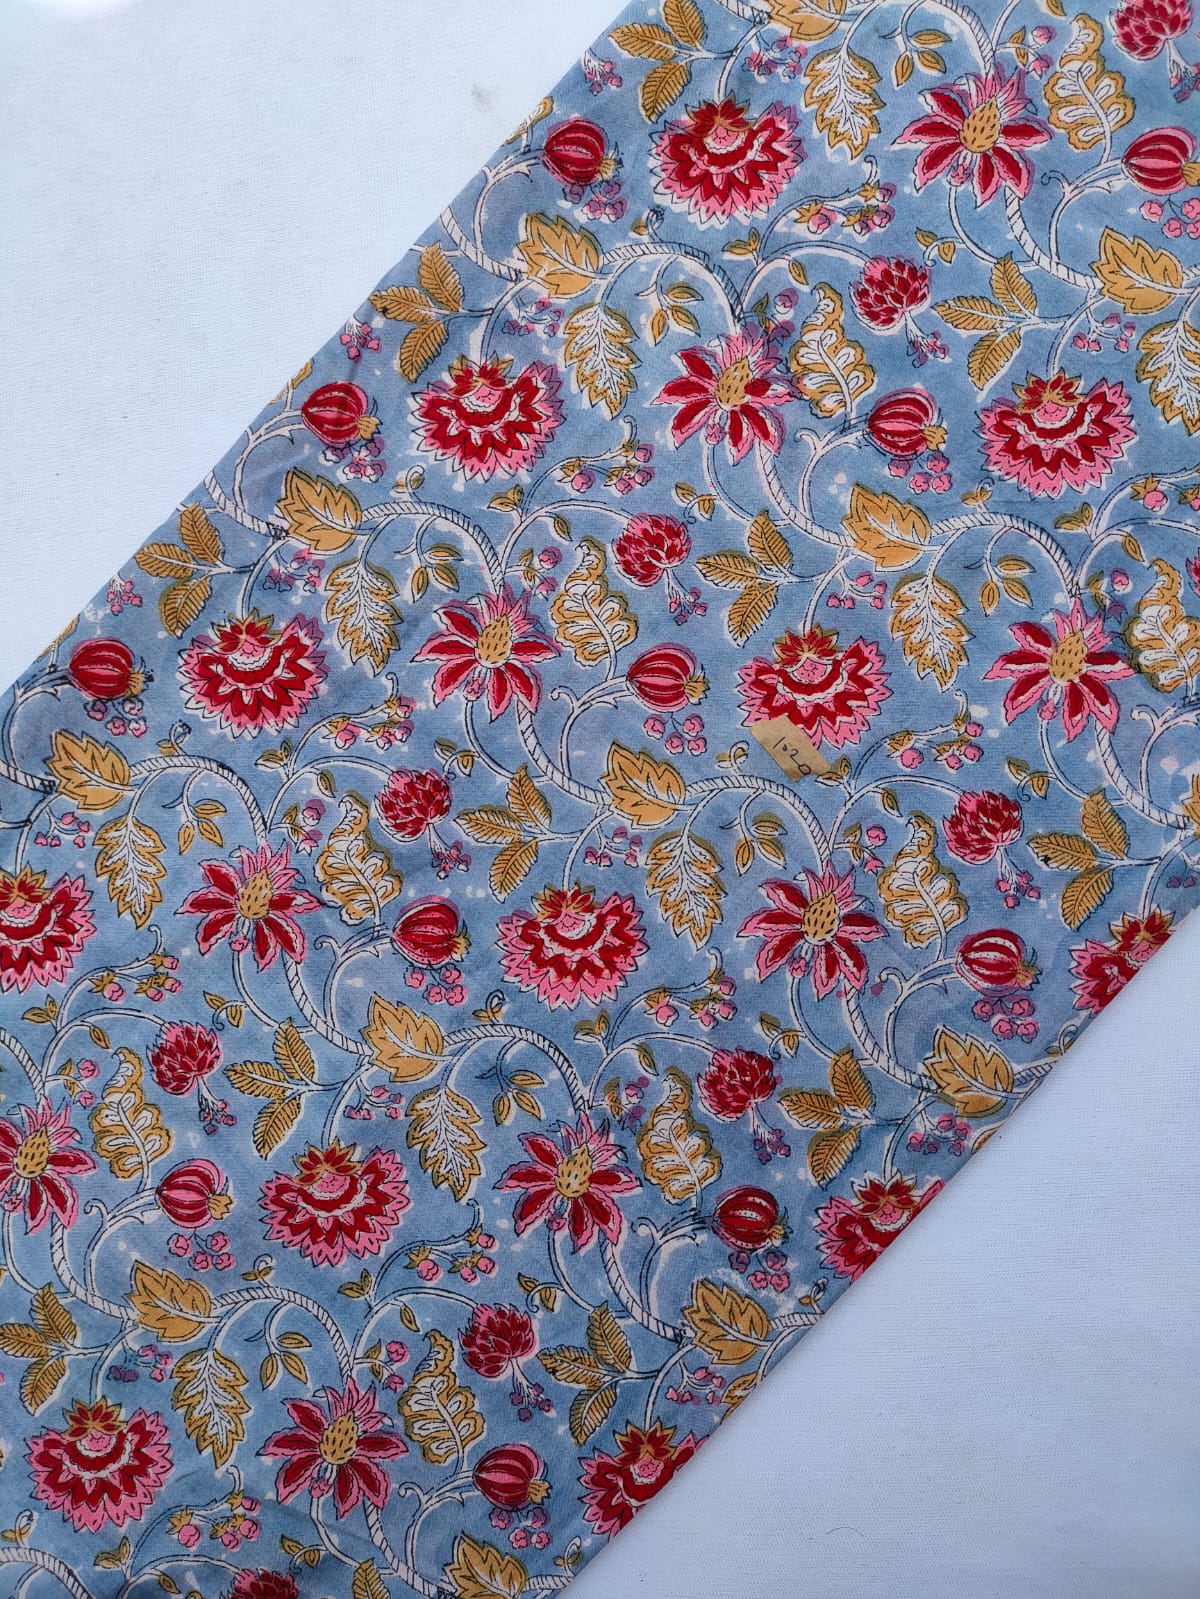 Jaipuri Hand Block Printed Pure Cotton Fabric In Running Length - JBRS508